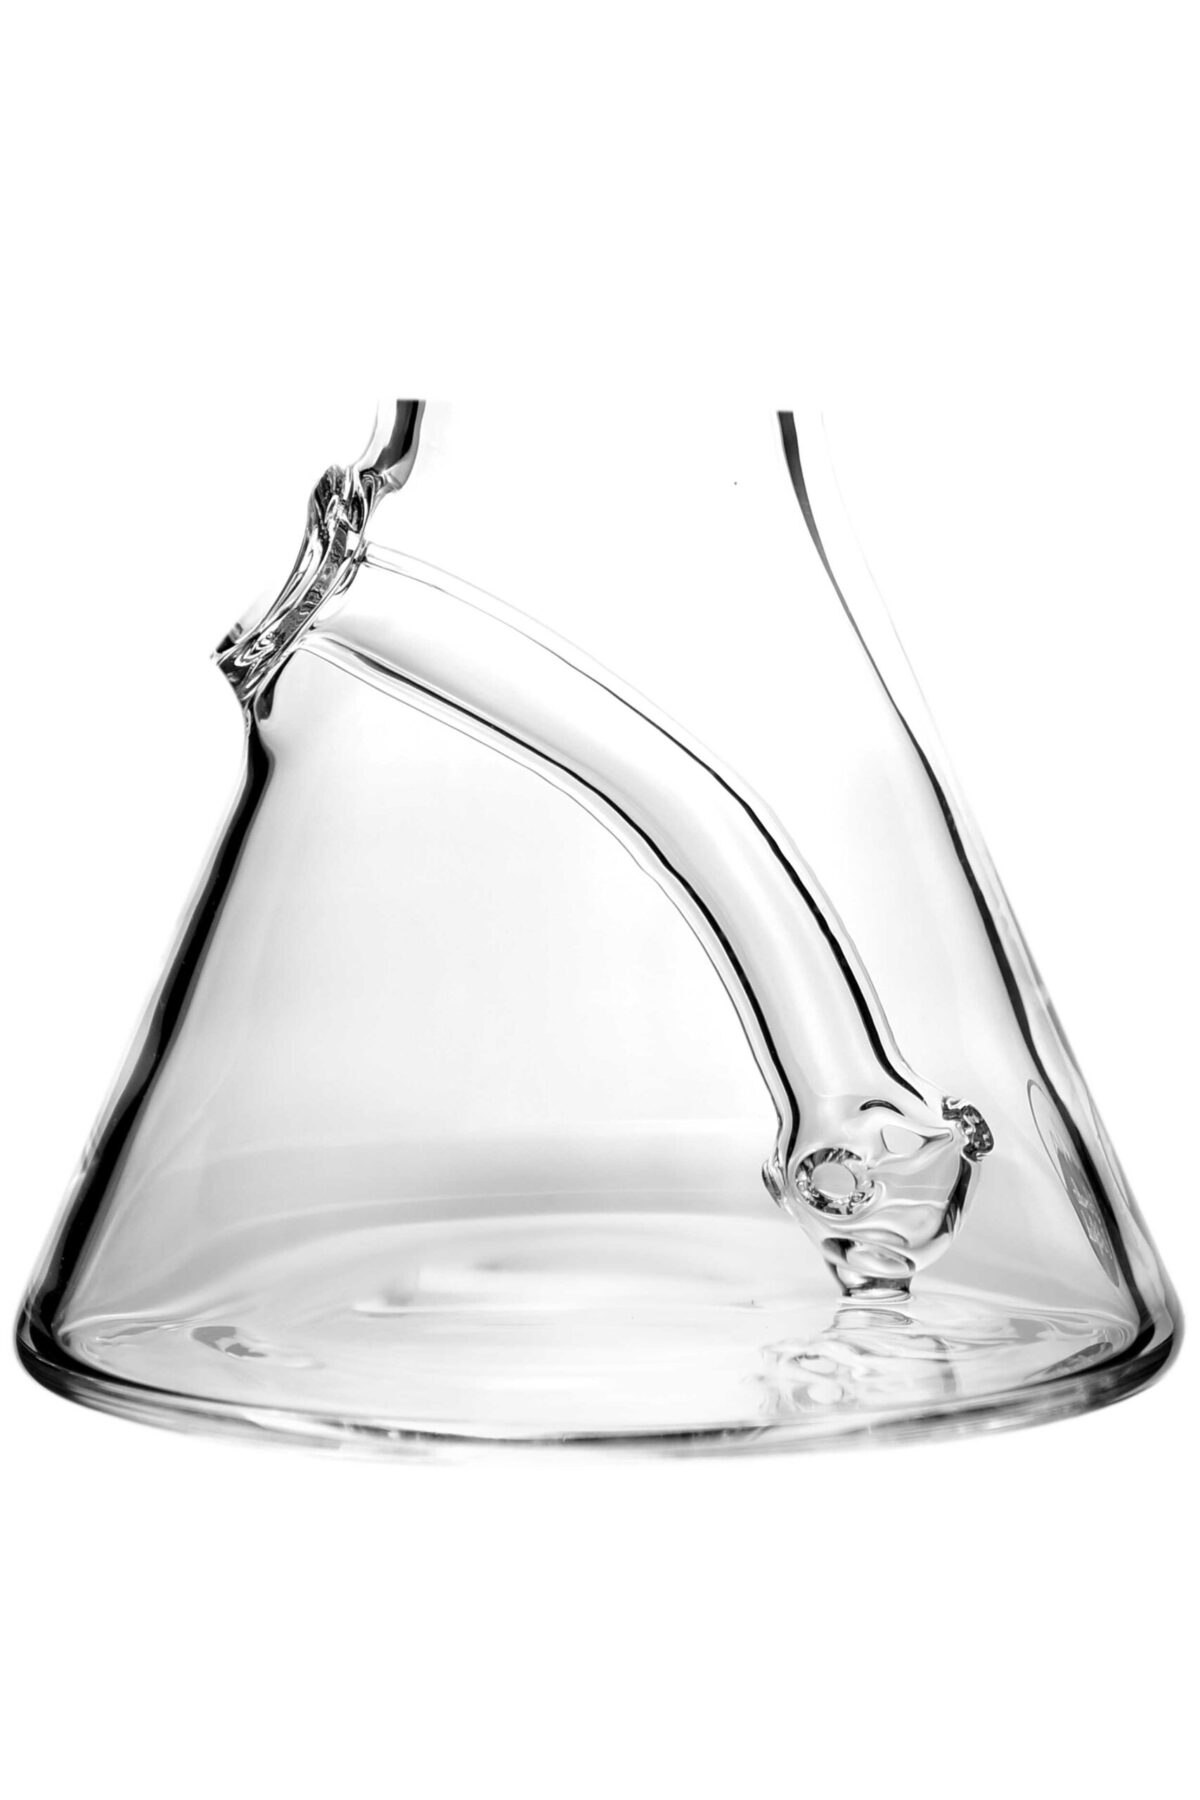 triangle base beaker diffusion glass bong pipedup co